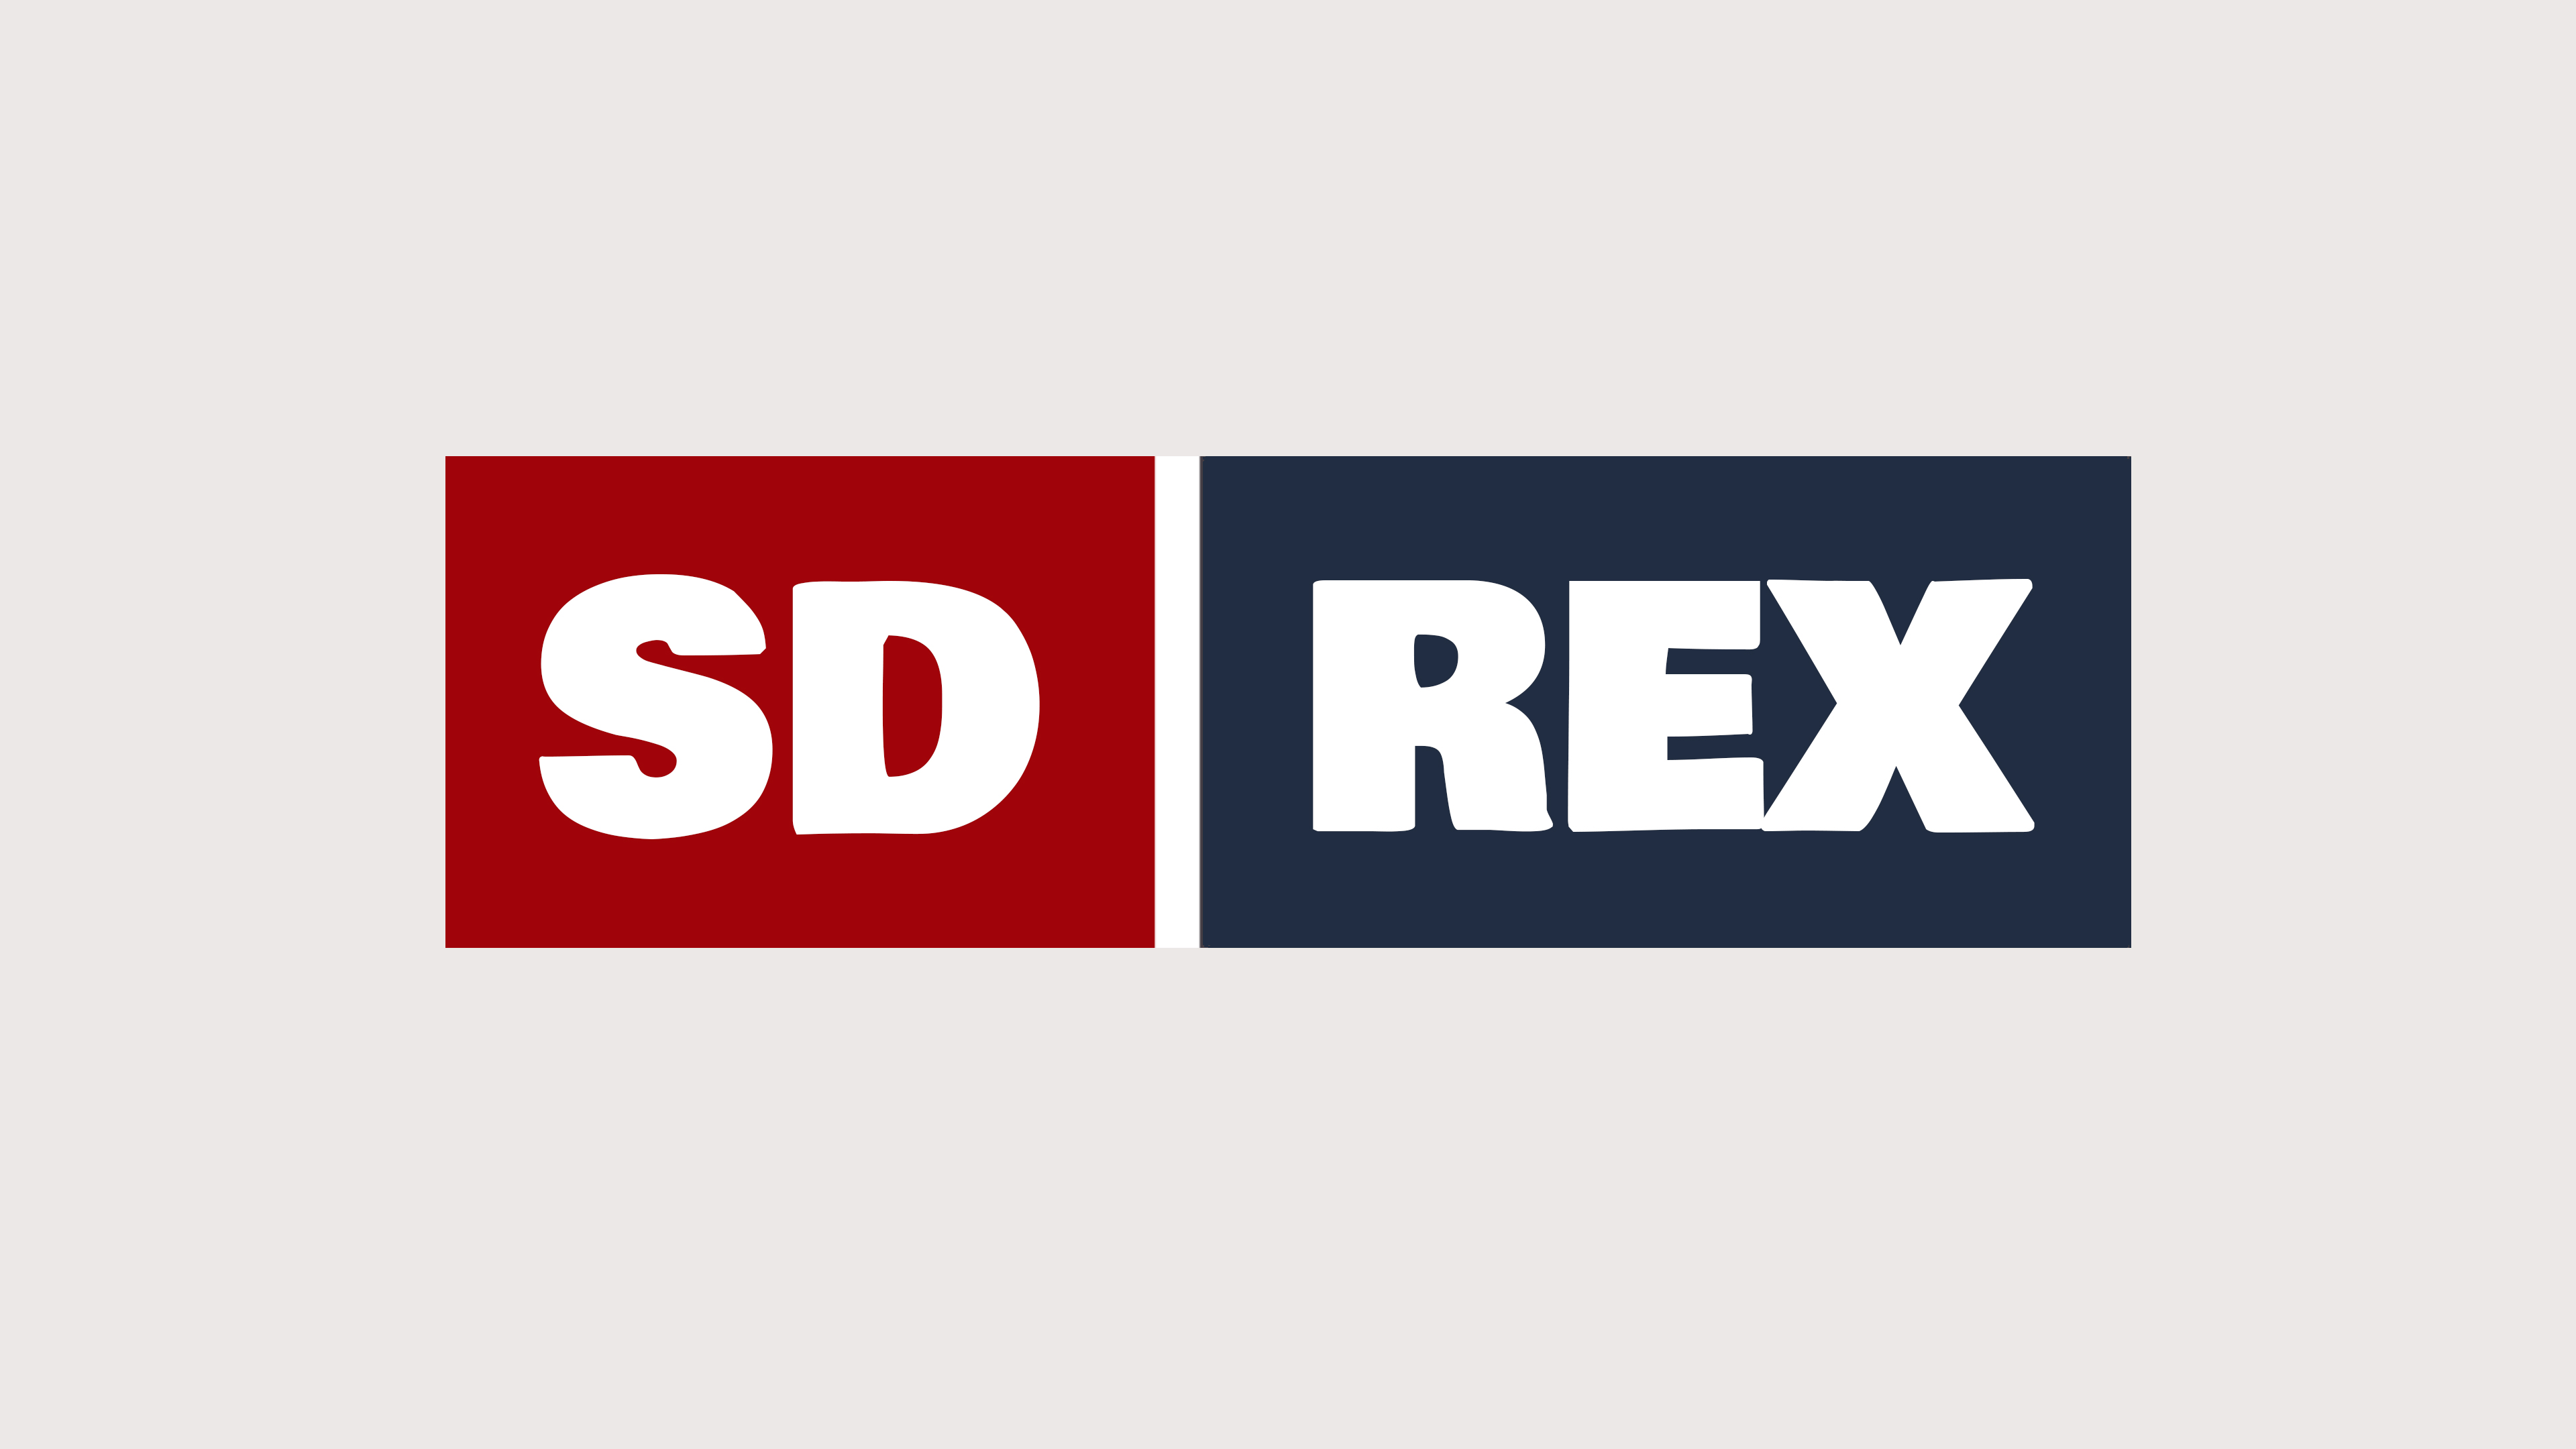 Sd tv. Логотип телеканала SD Rex. Логотип ТВ. ТВ каналы. Эмблемы телевизионных каналов.